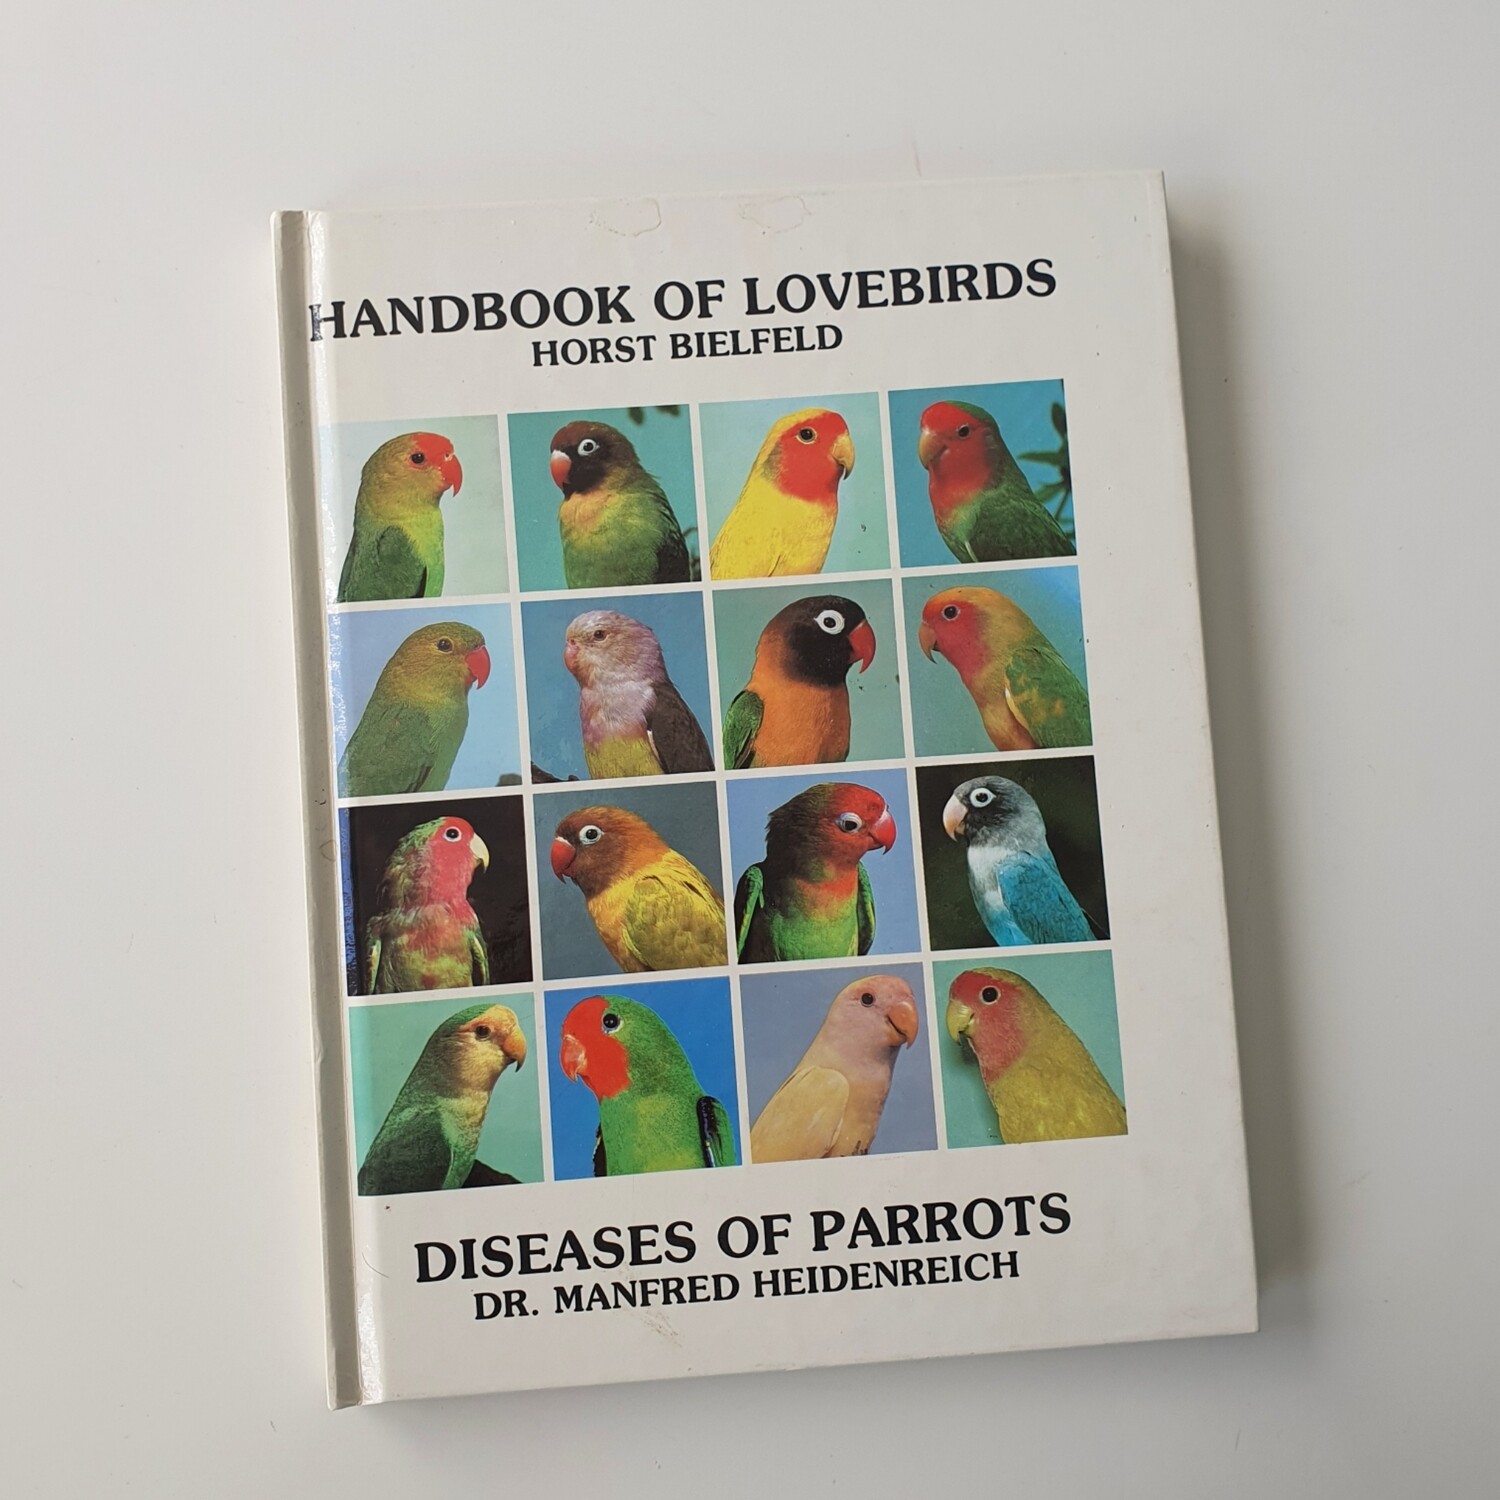 Handbook of  Lovebirds and Diseases of Parrots